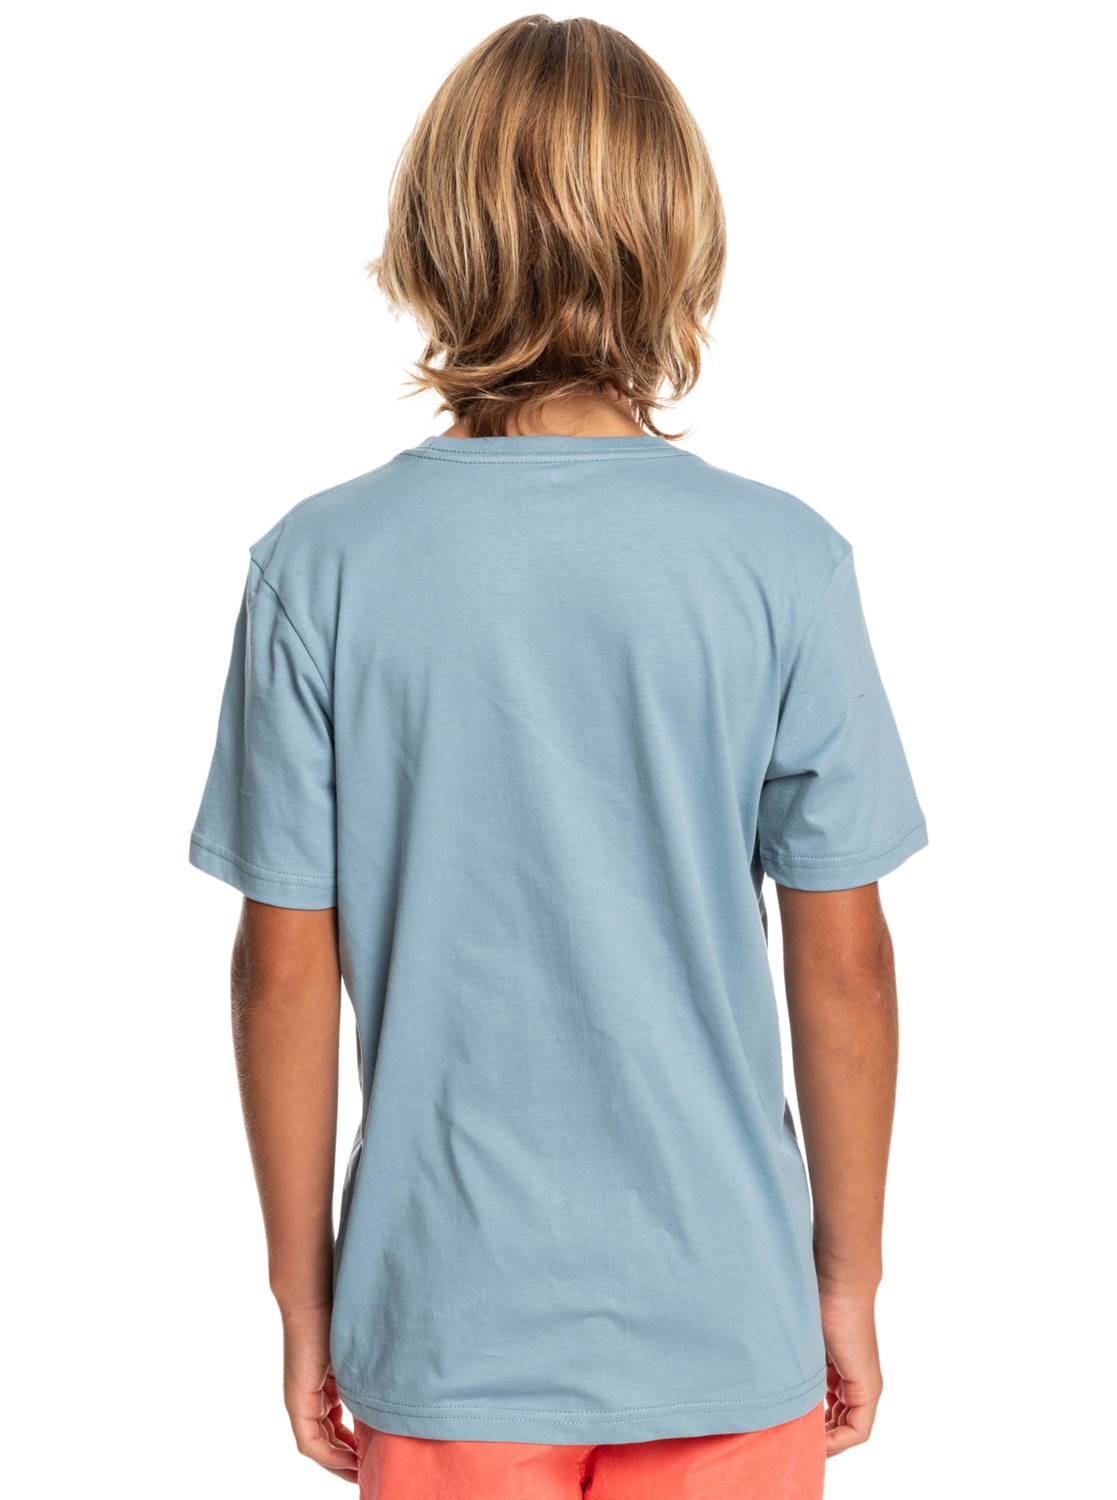 »Comp Trendige shoppen Logo« Quiksilver versandkostenfrei T-Shirt